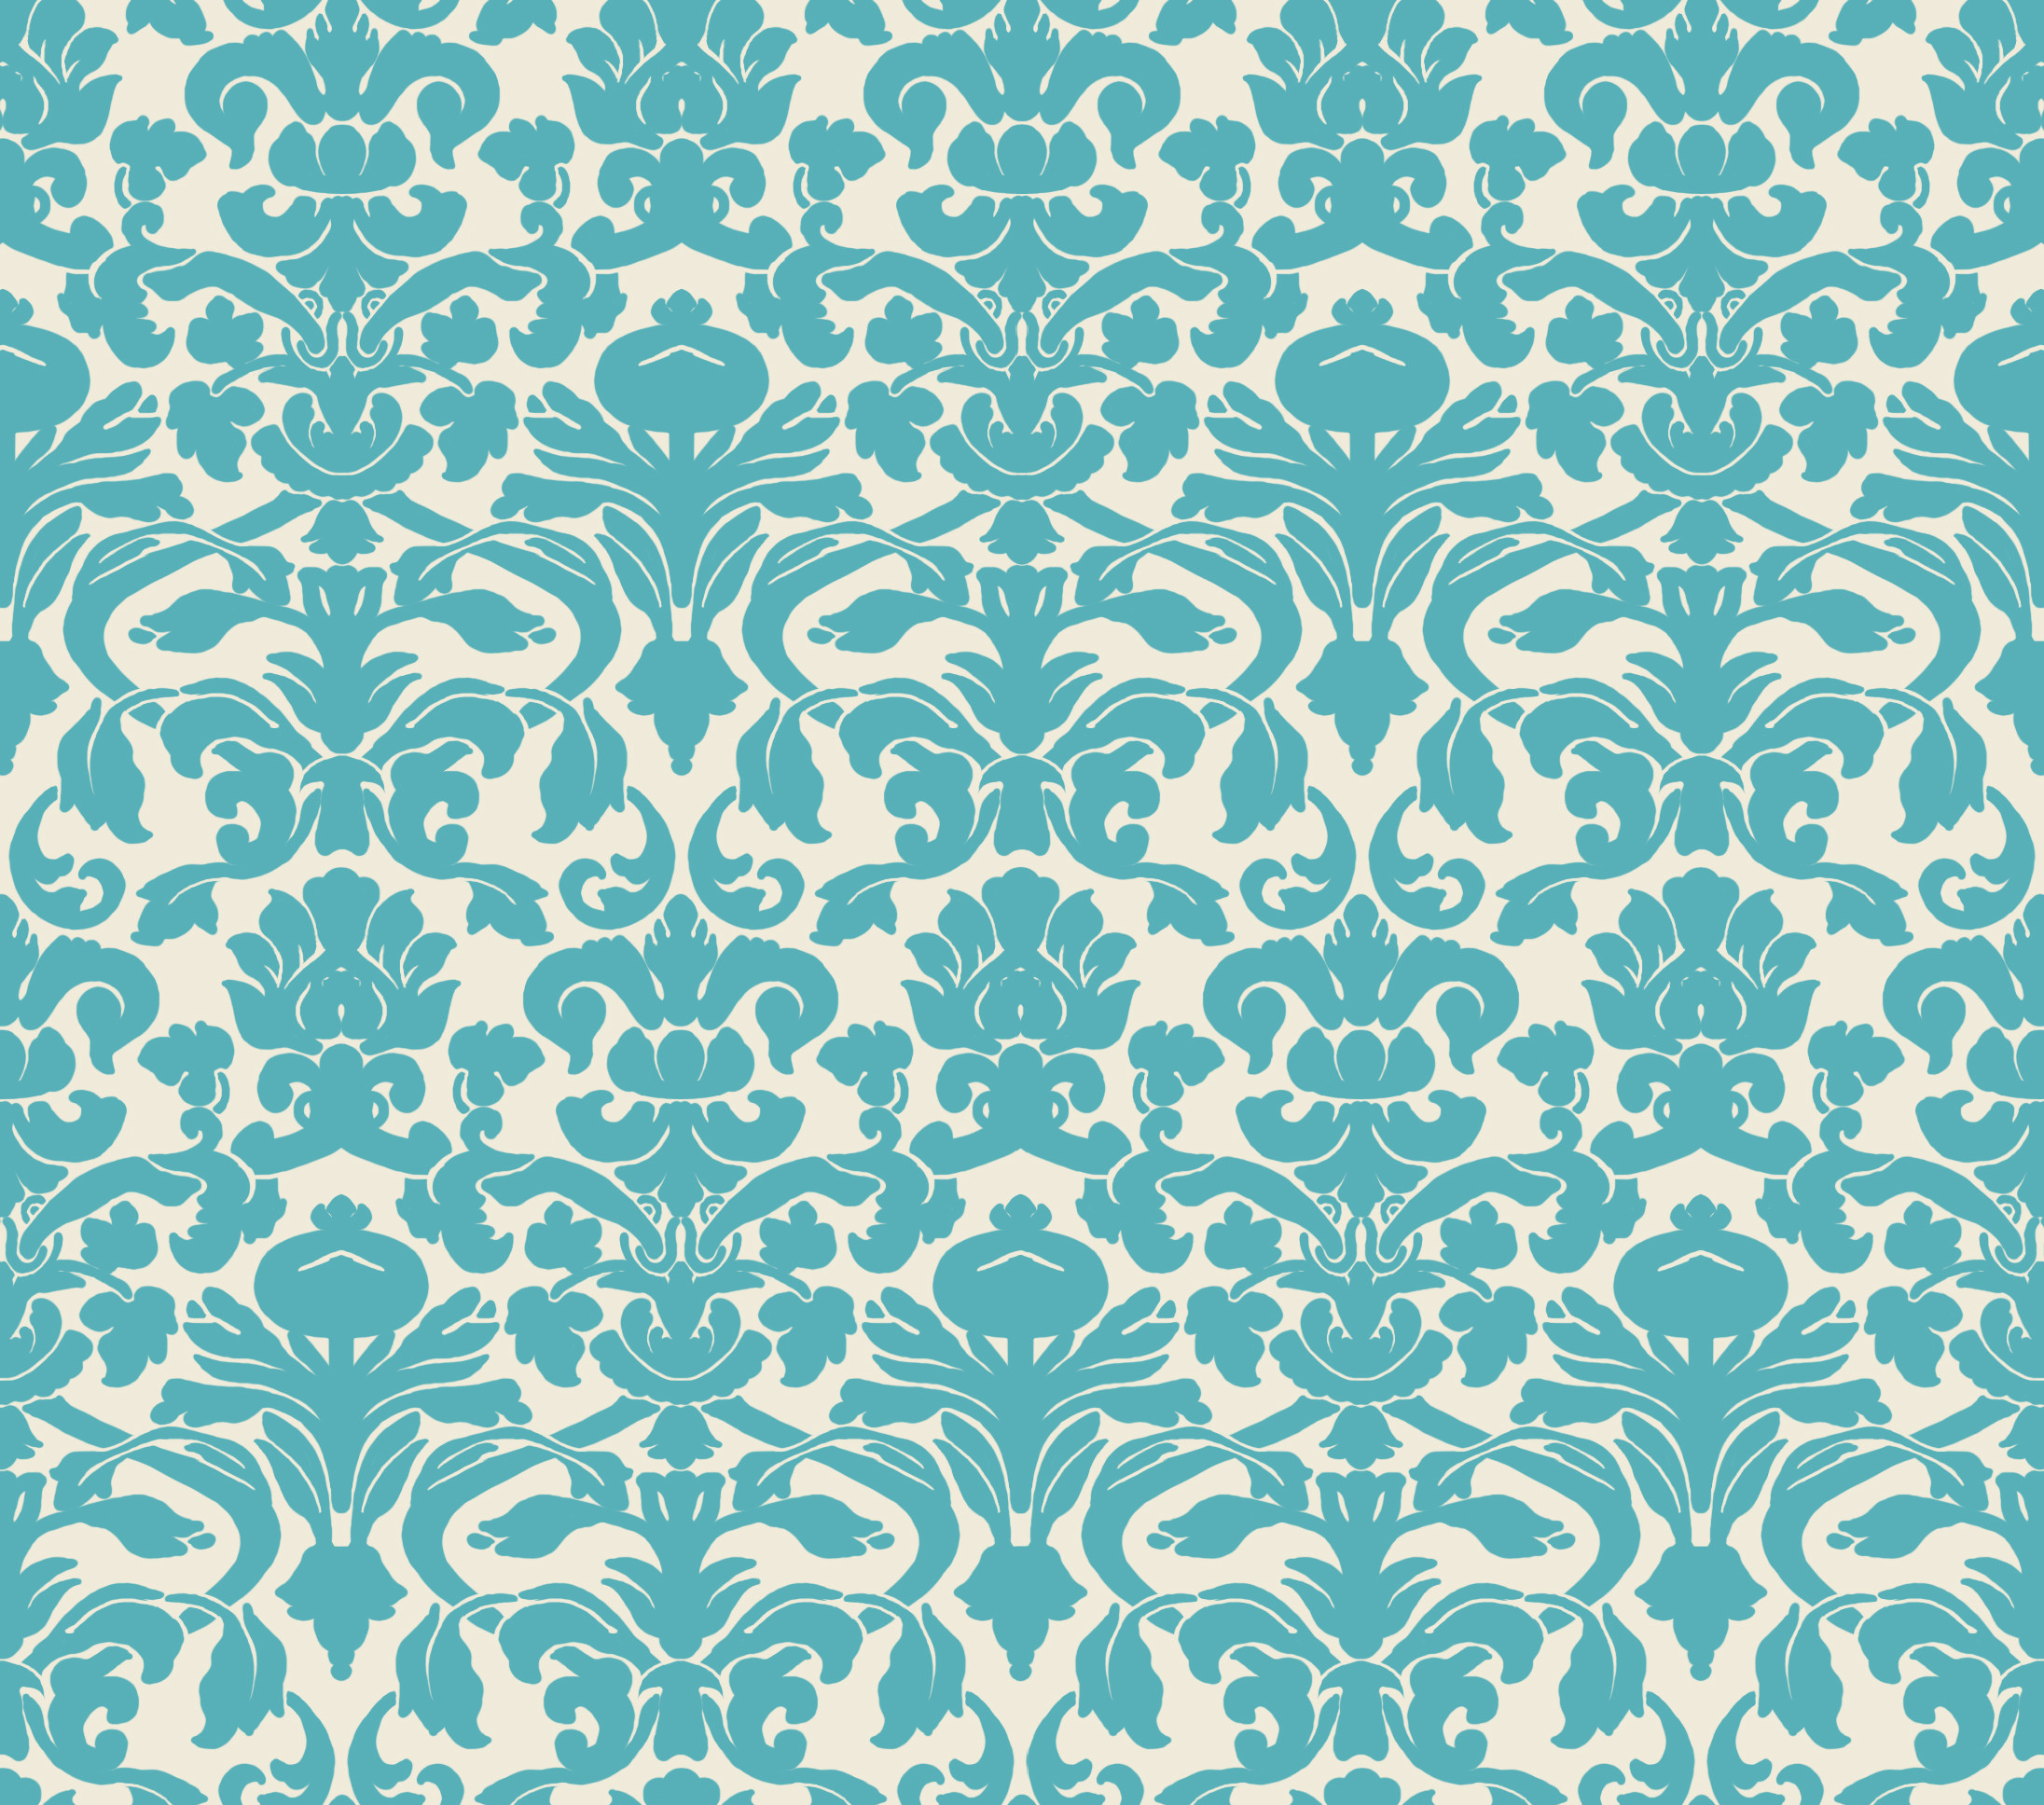 2192x1936 2012 insurrectionx ornate wallpaper pattern edges match up pattern can